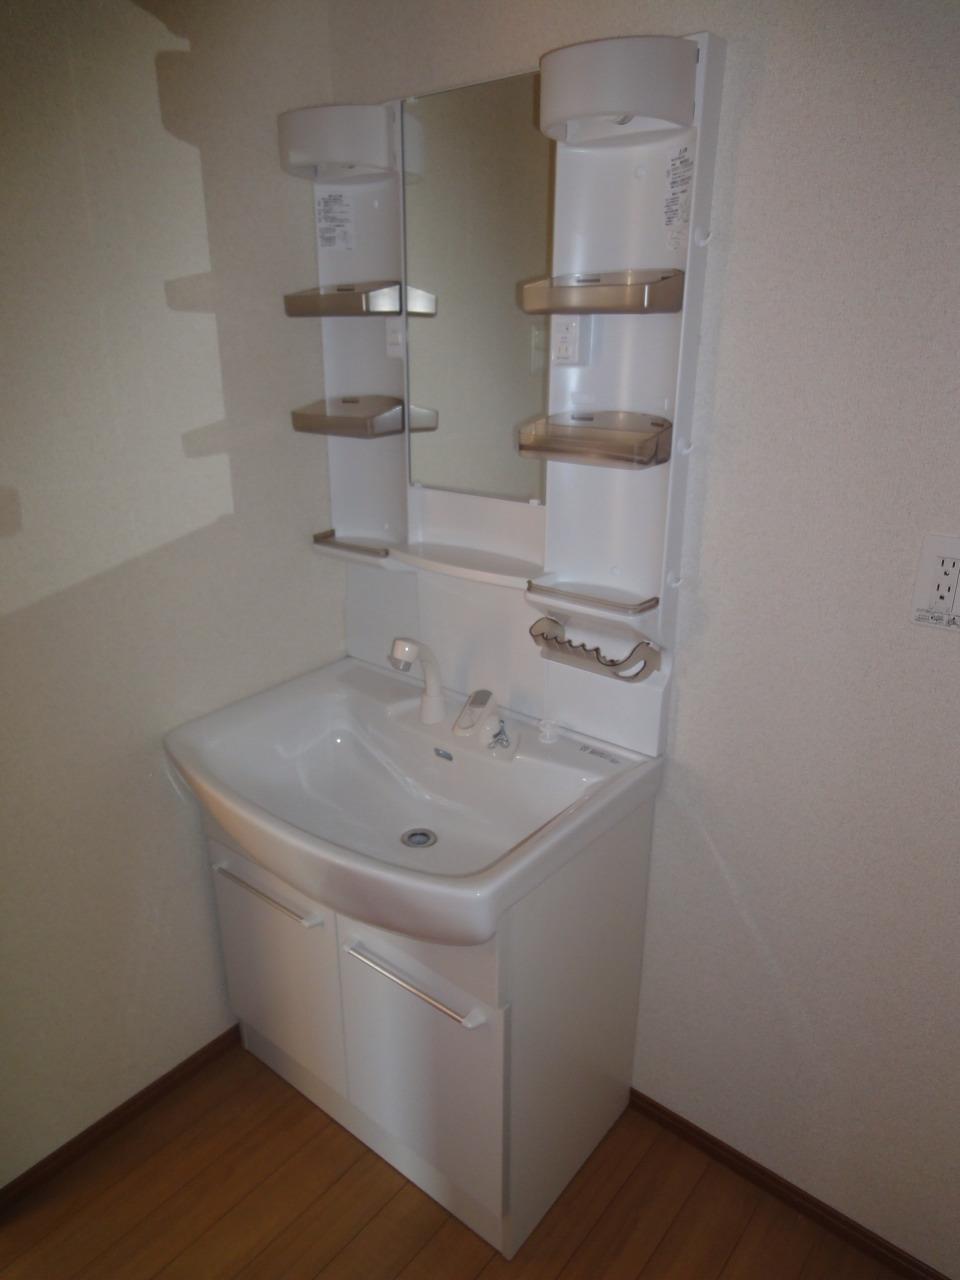 Wash basin, toilet. (2013.11.14 shooting)